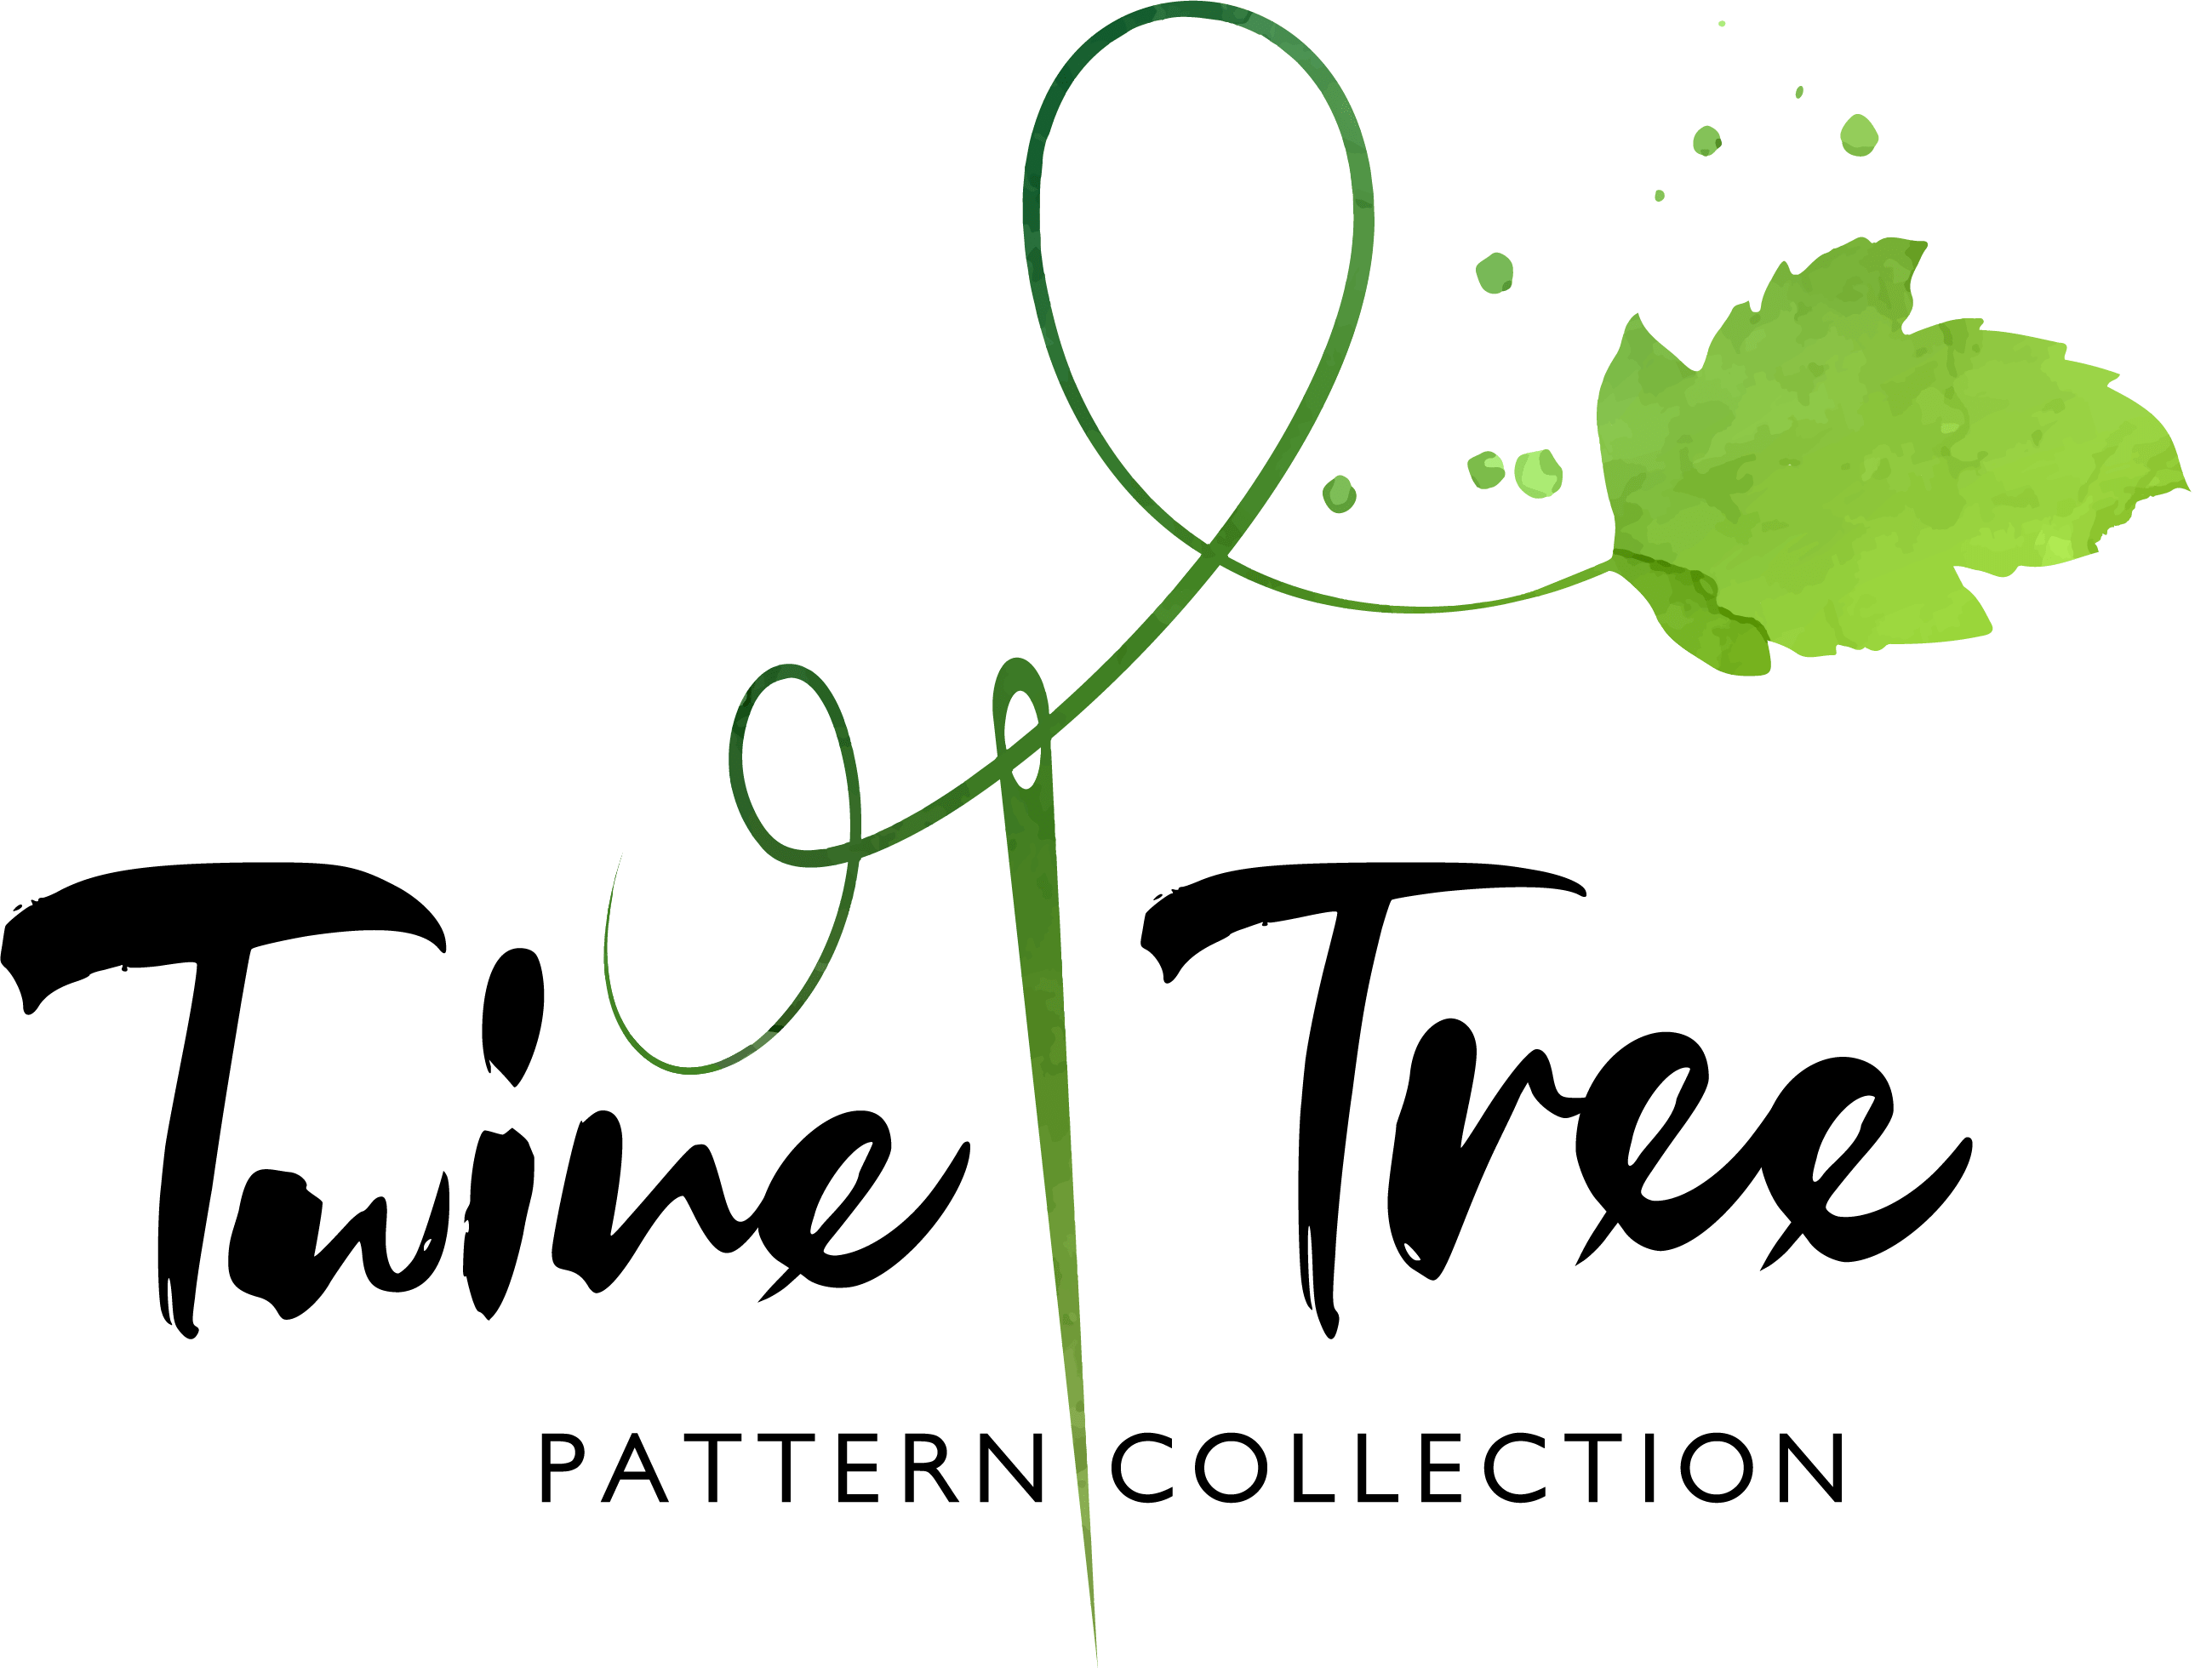 Twine Tree Patterns